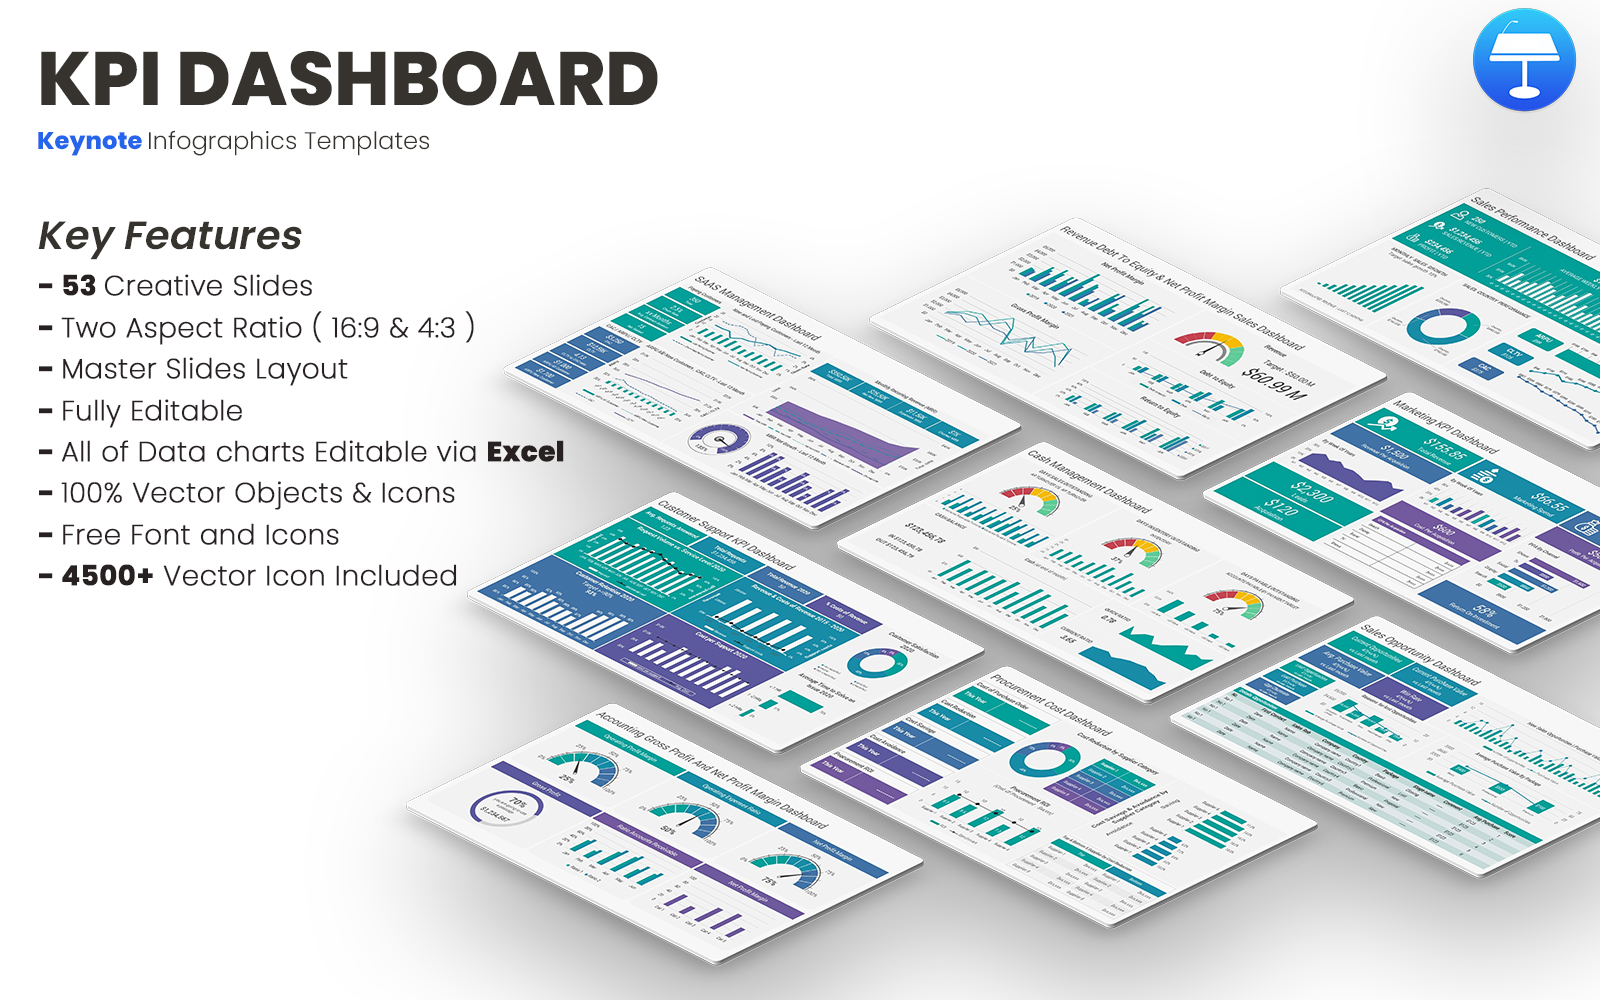 KPI Dashboard Keynote Templates